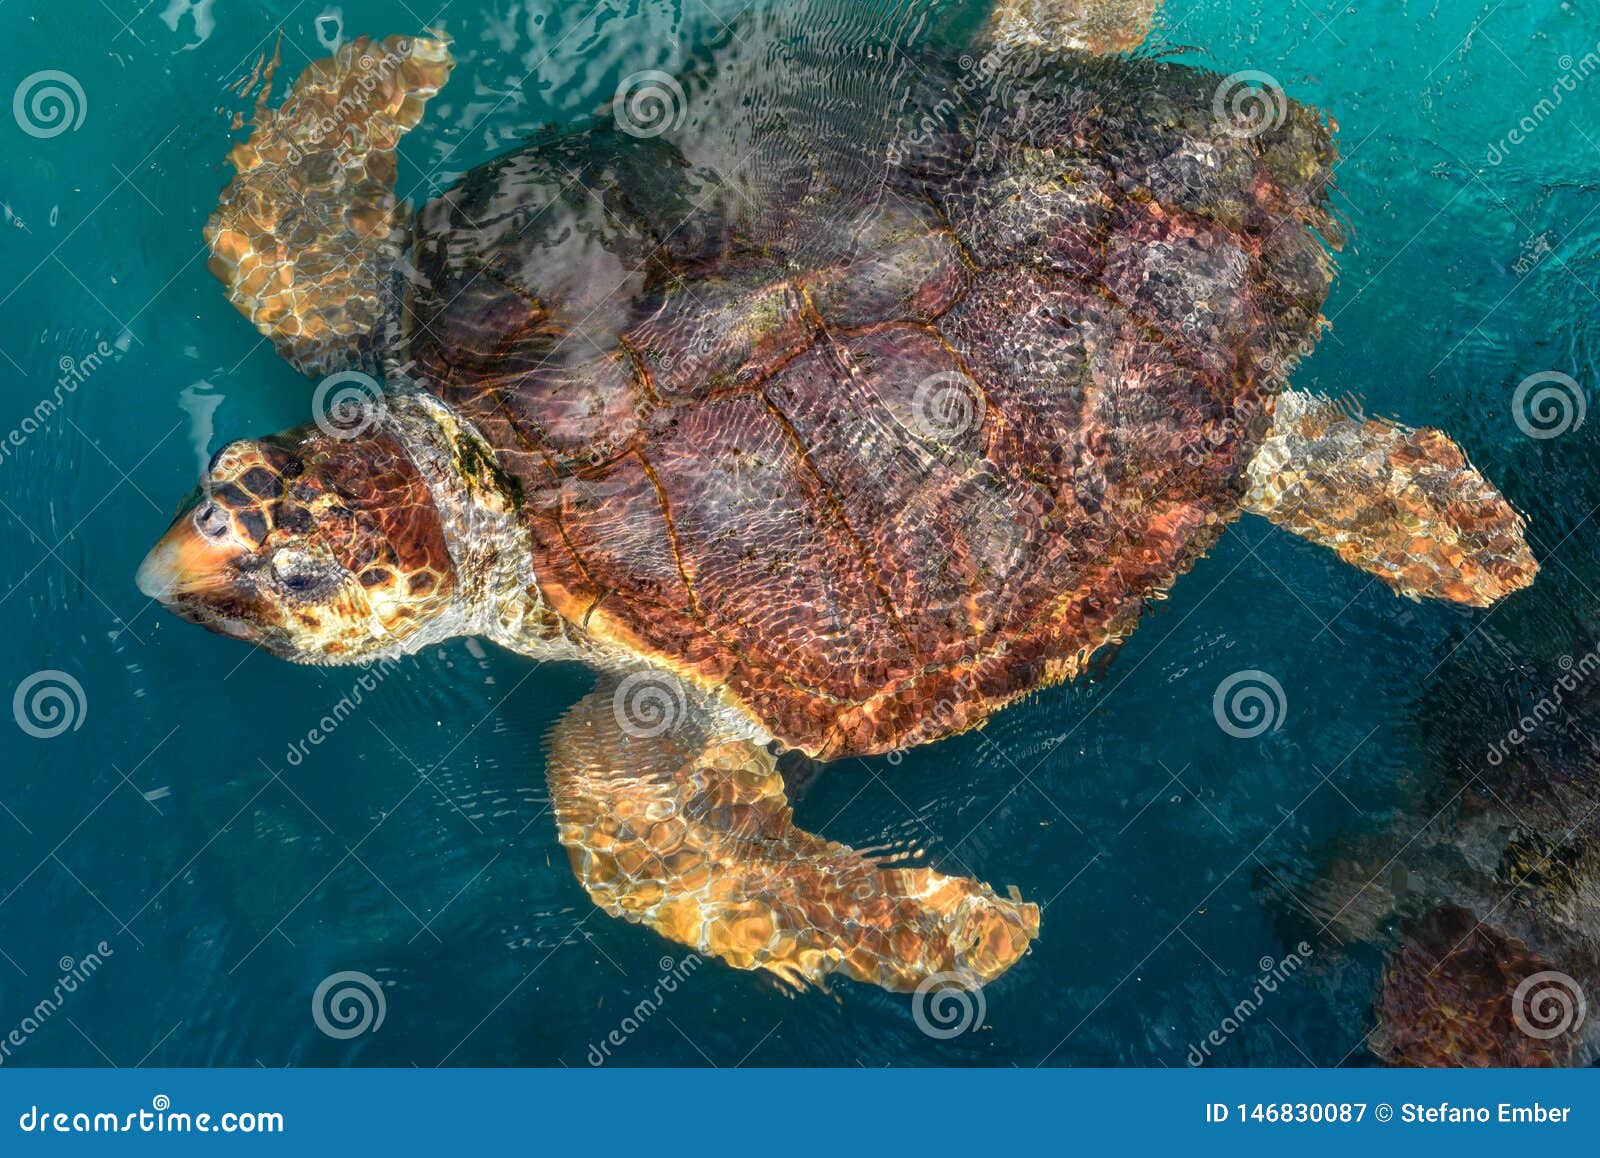 turtle swimming in project tamar tank at praia do forte, brazil